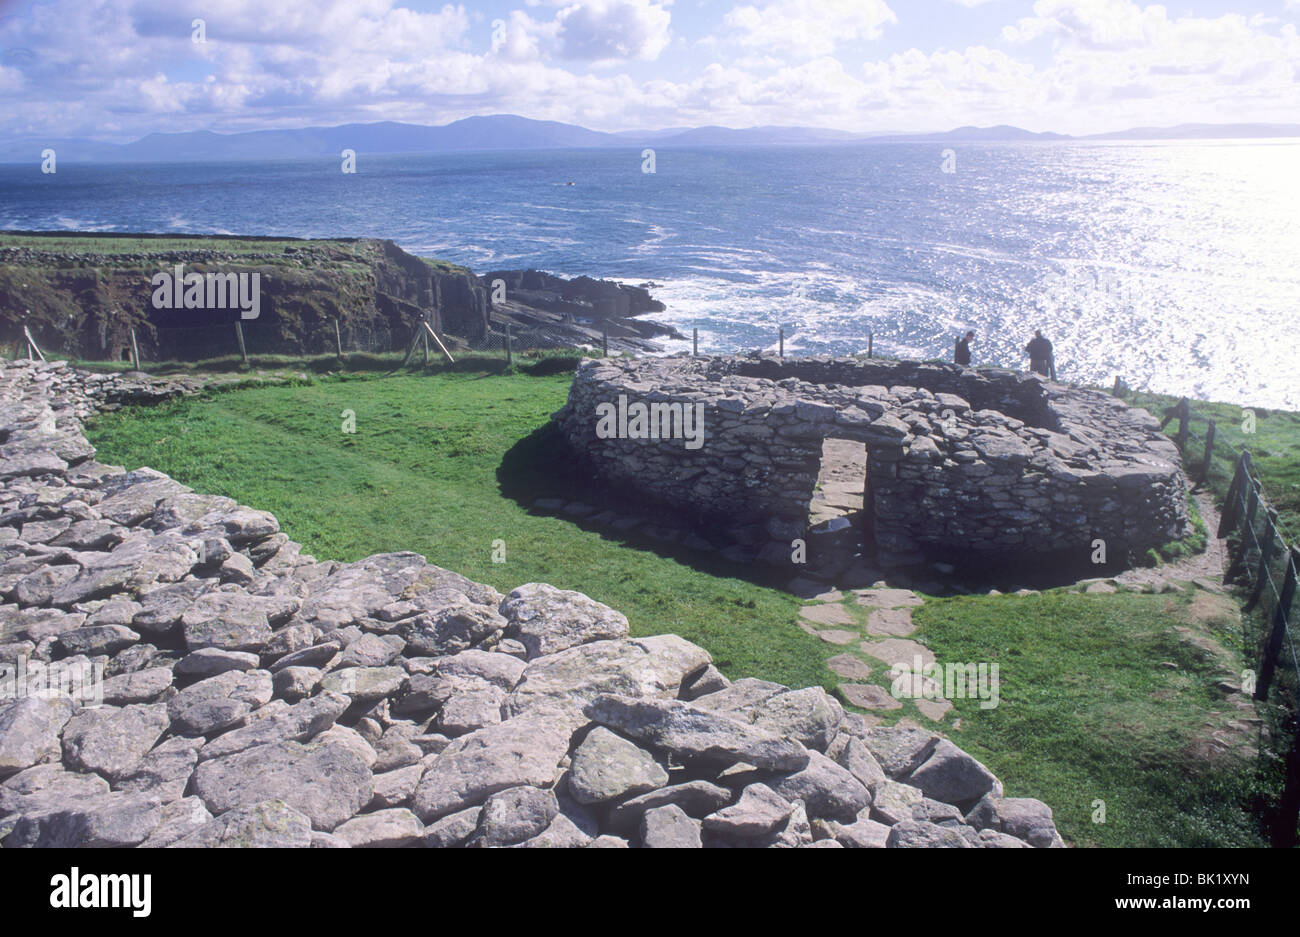 Dunbeg Fort, County Kerry, Dingle Peninsula Ireland Eire Promontory Fort mount Eagle clifftop Bronze Age Irish forts Dingle Bay Stock Photo